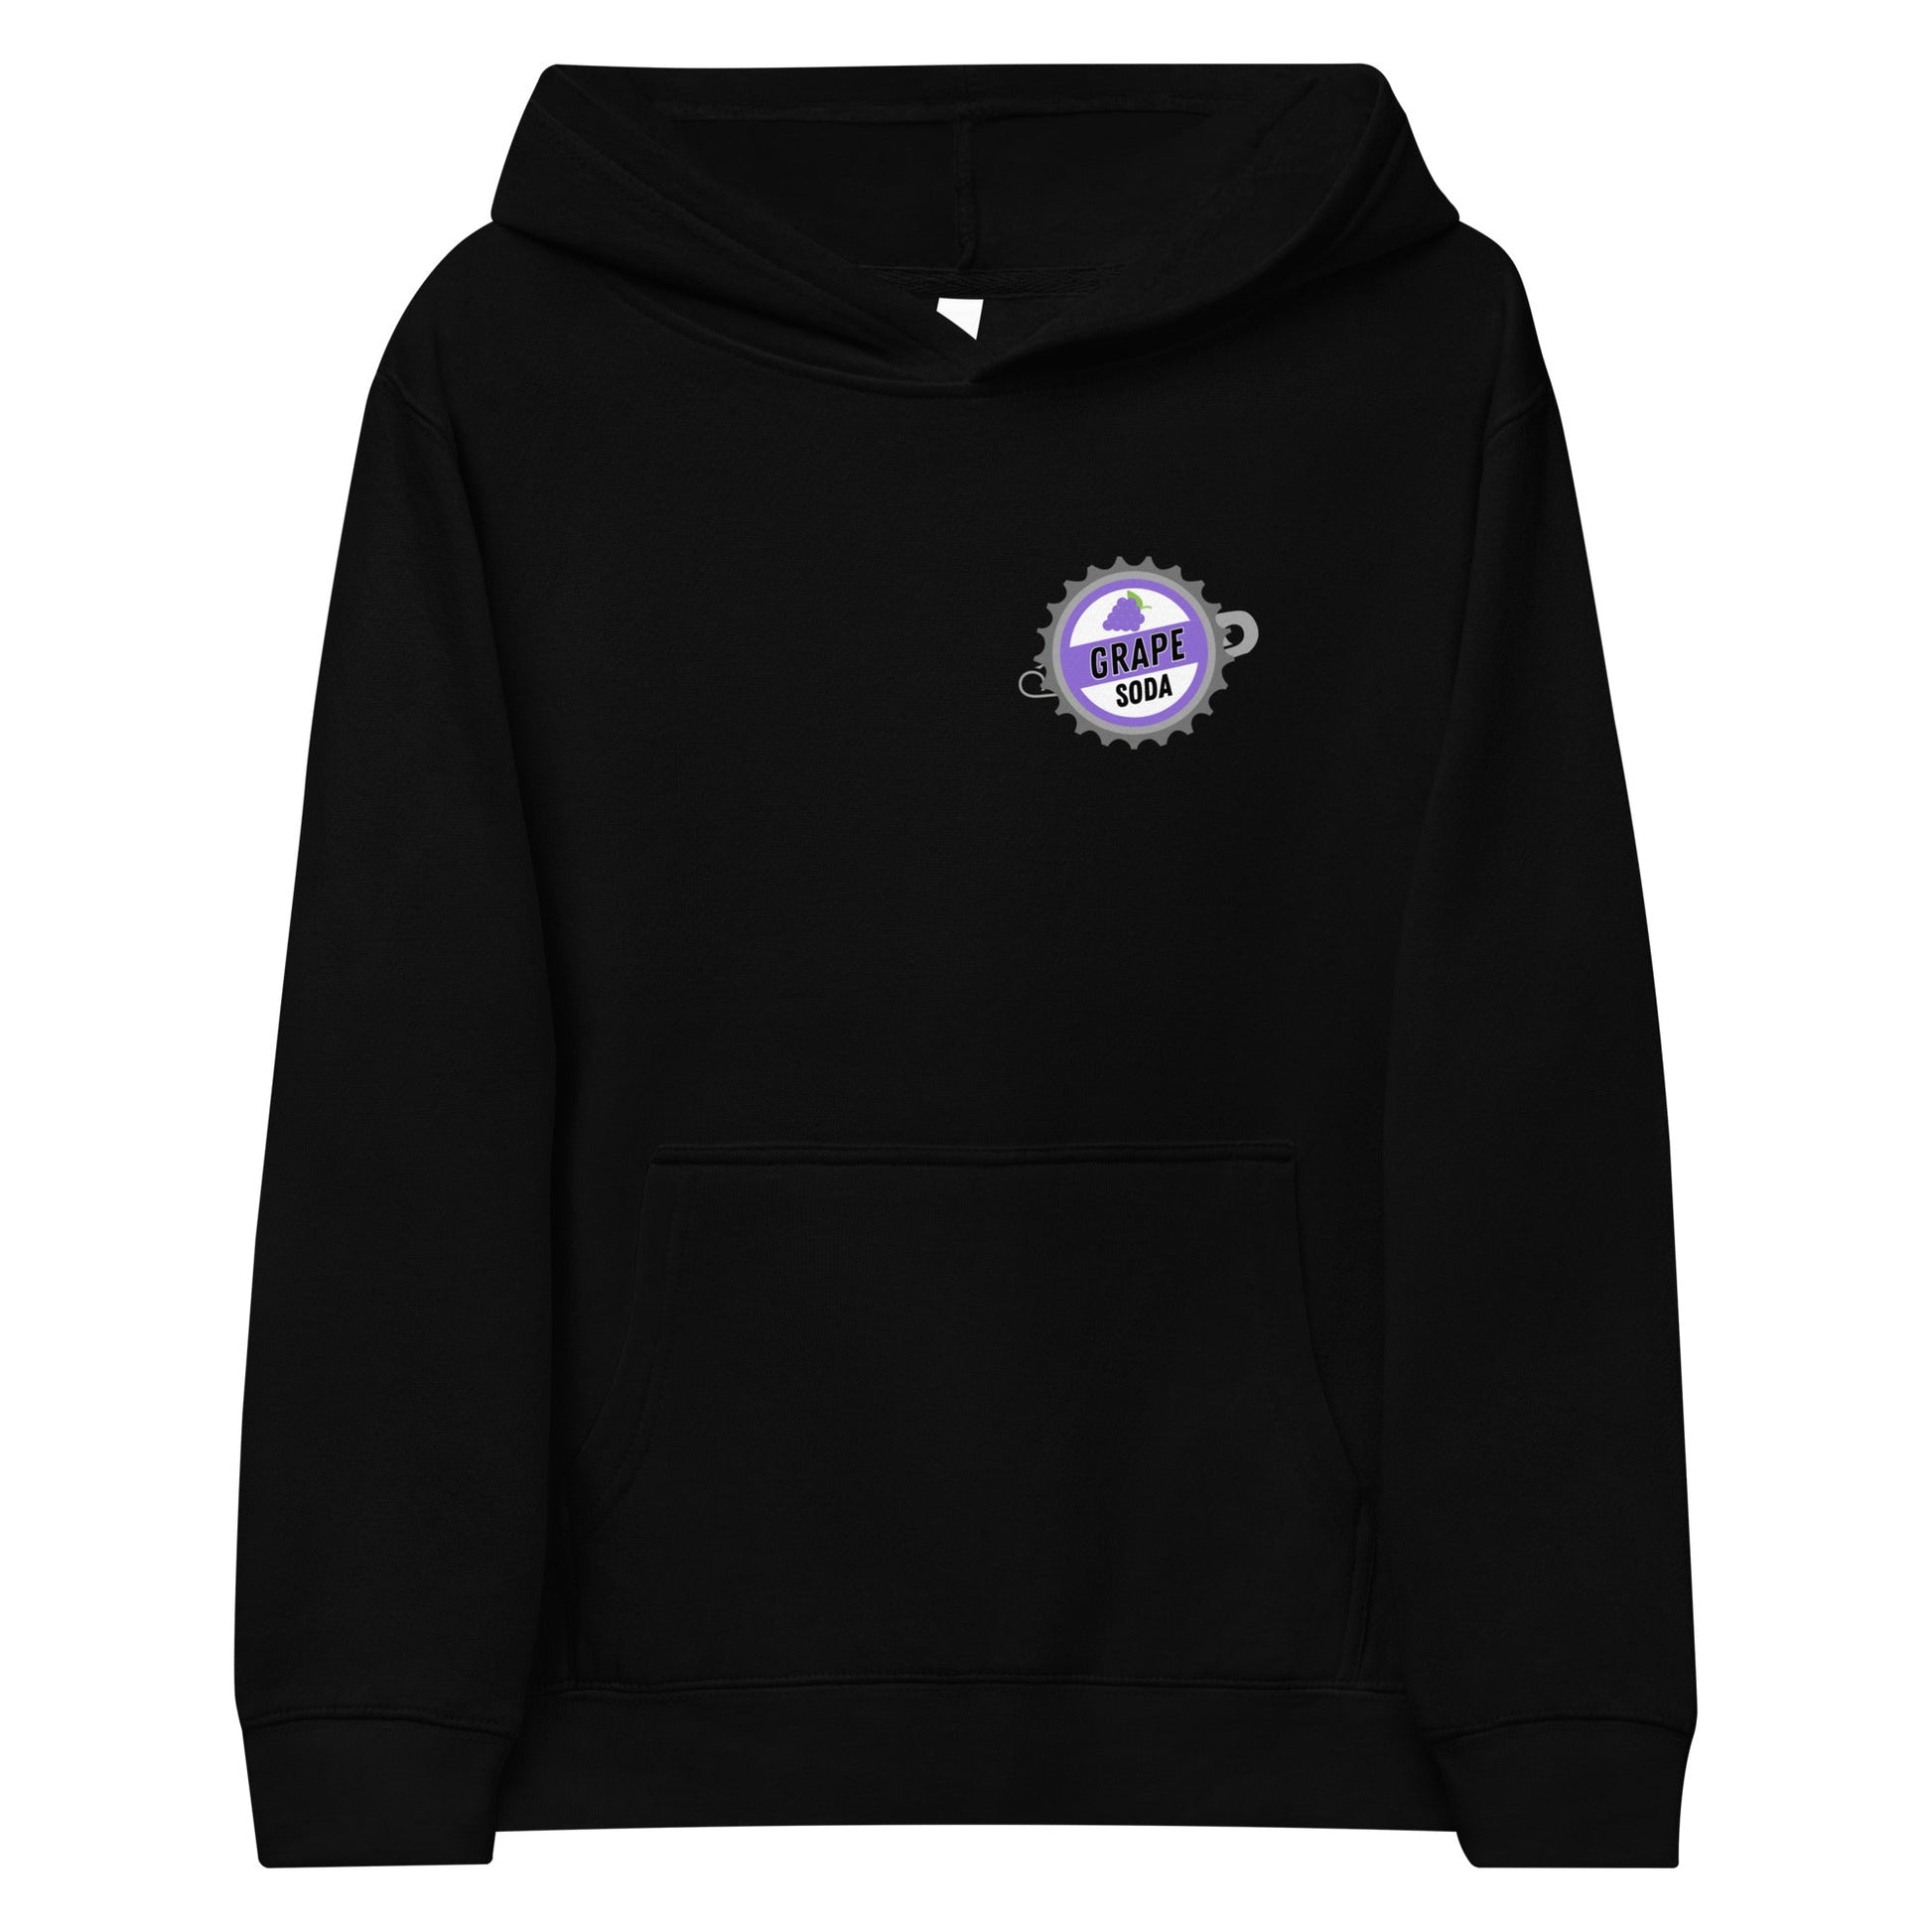 Grape Soda Kids fleece hoodie 100 years of wonderdisney giftdisney gifts#tag4##tag5##tag6#